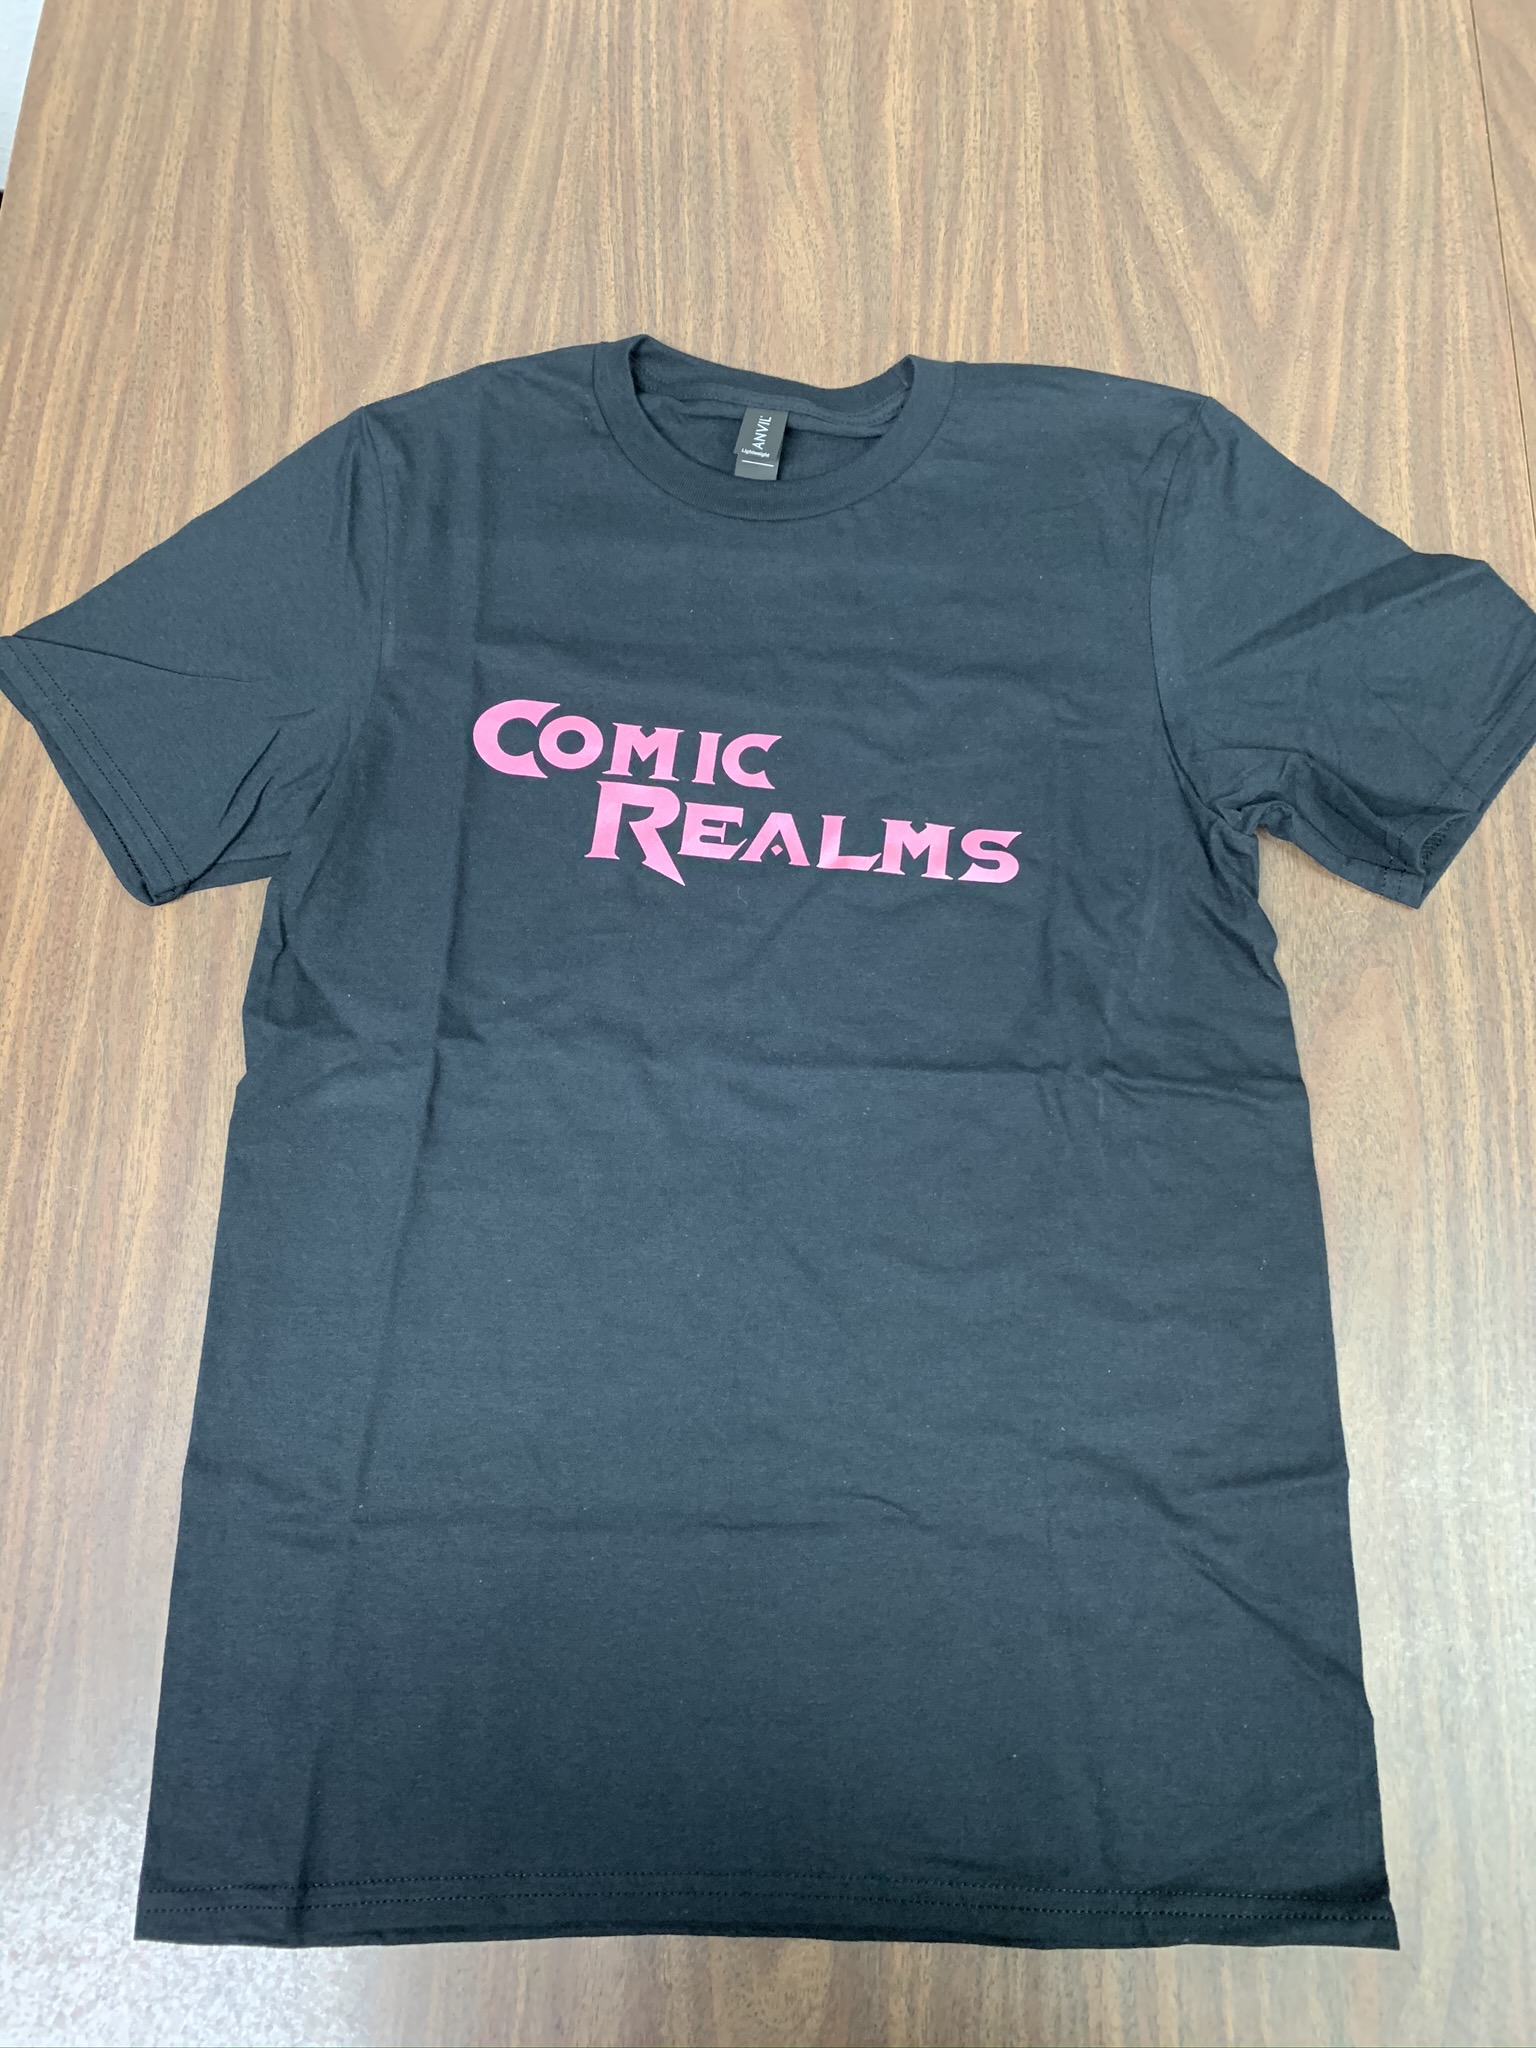 Comic Realms T-Shirt Small Black/Pearl Pink